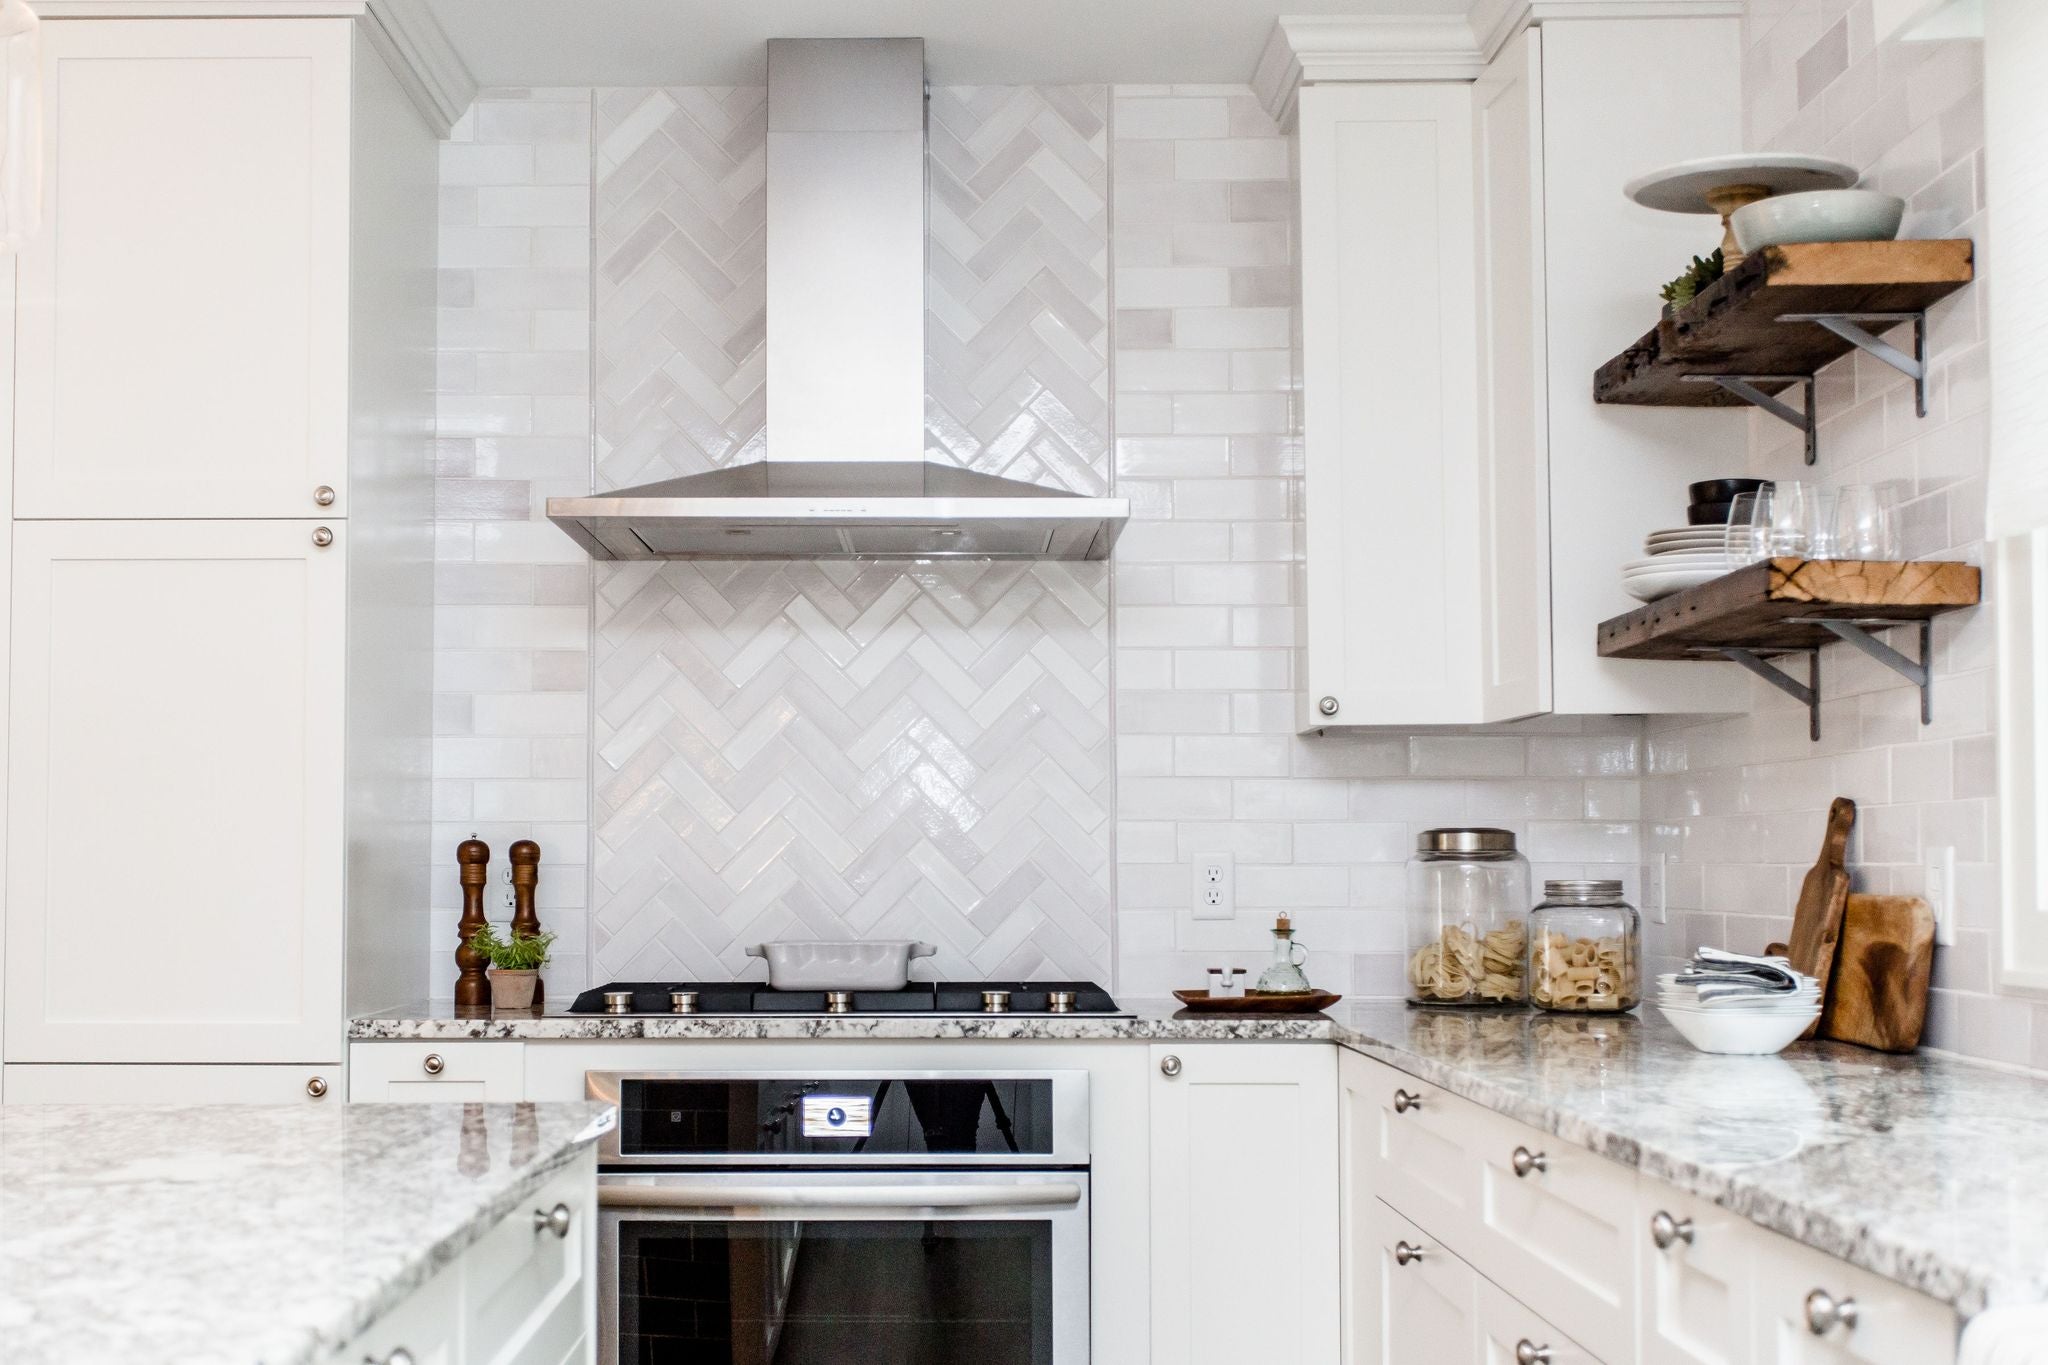 Before & After Kitchen Backsplash Ideas: Construction2style – Mercury  Mosaics